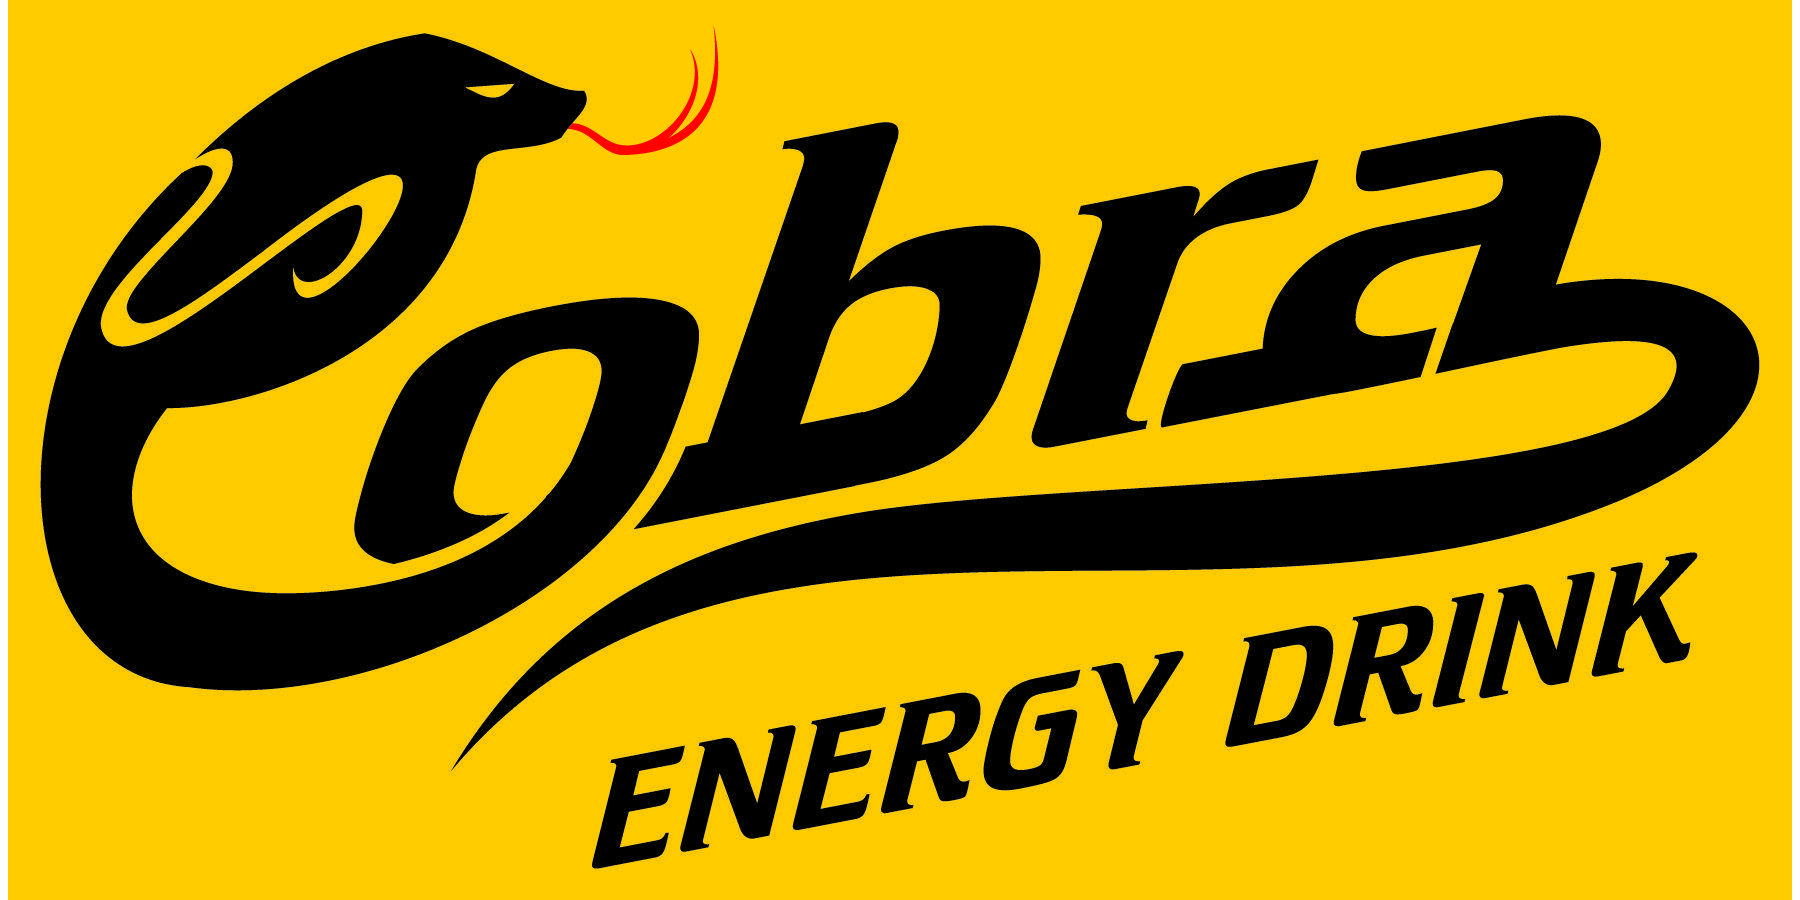 Energy Drink Logo - Cobra Energy Drink | Logopedia | FANDOM powered by Wikia